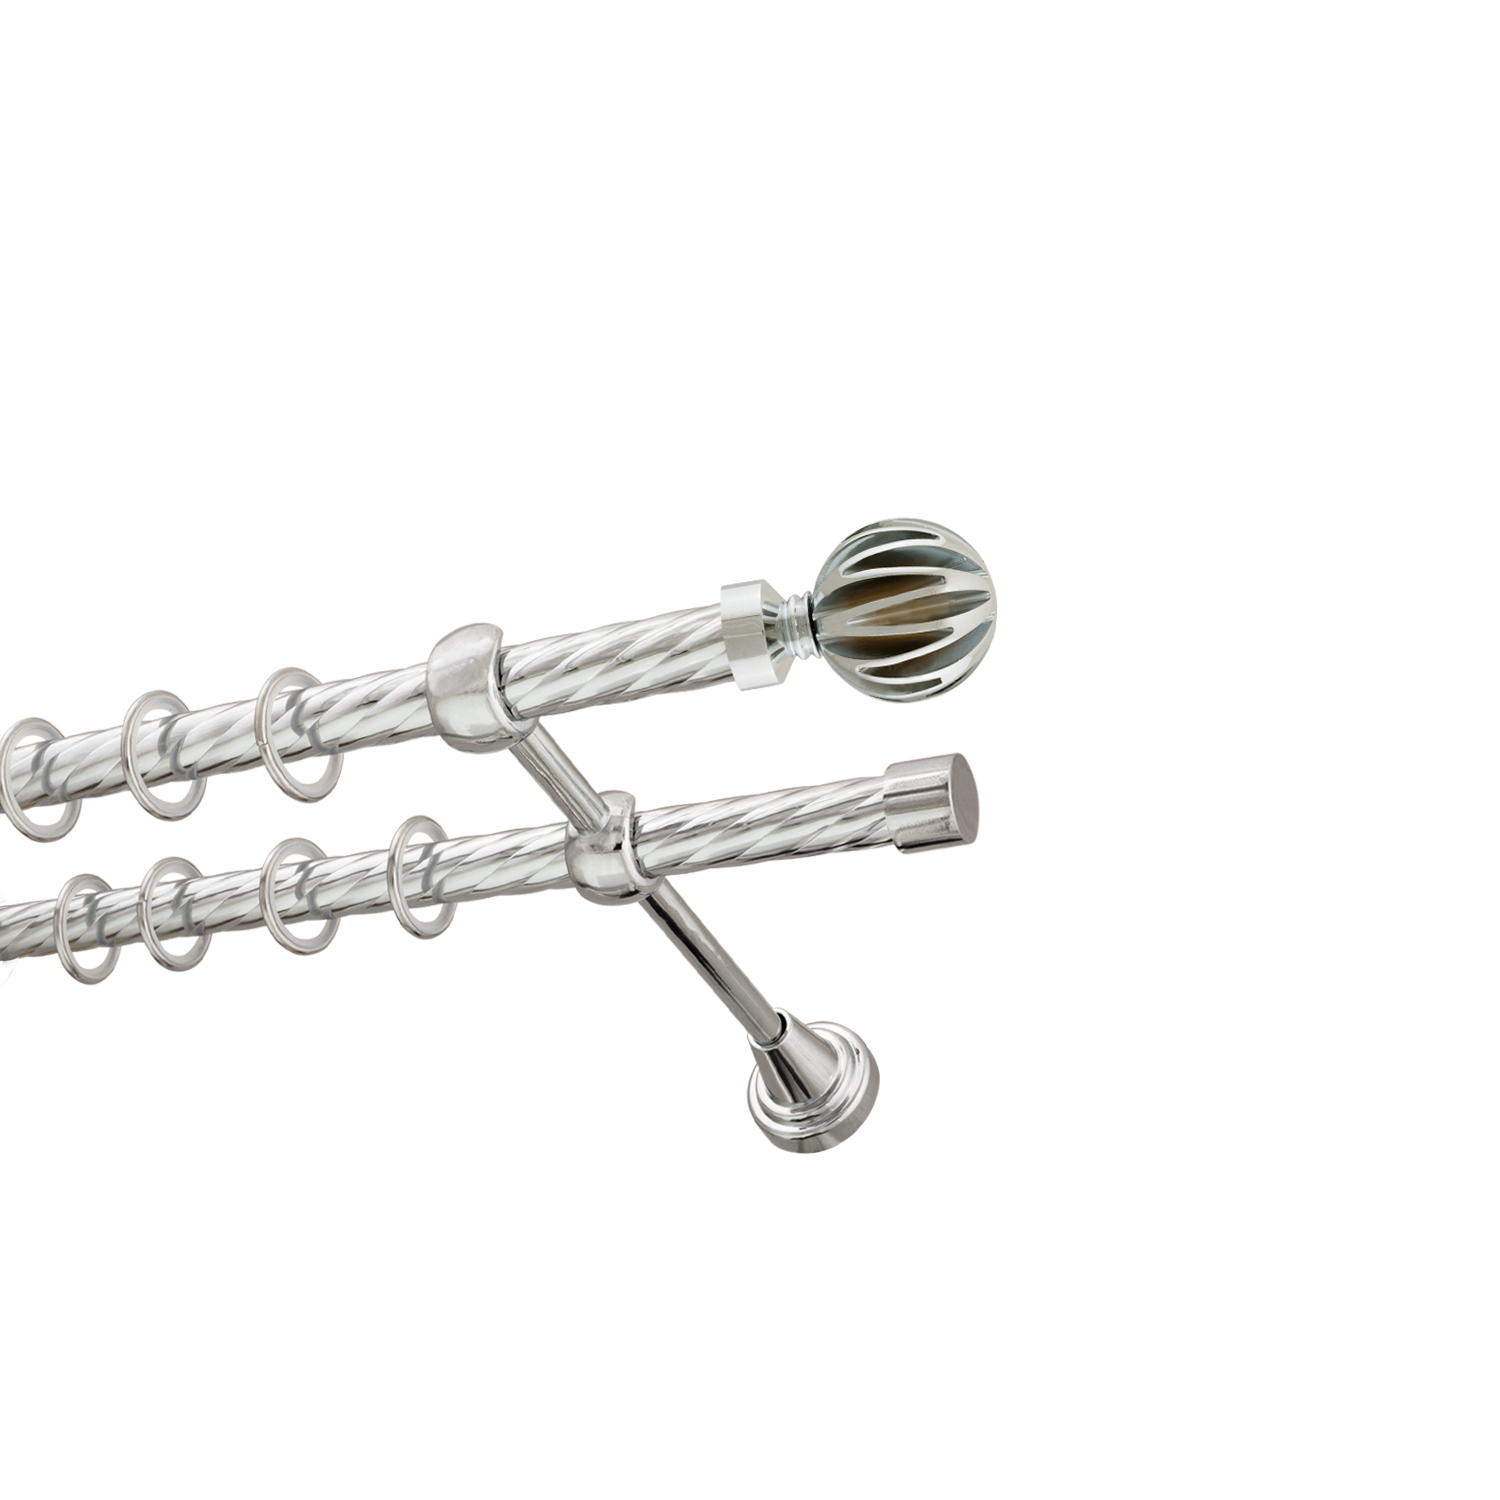 Металлический карниз для штор Шафран, двухрядный 16/16 мм, серебро, витая штанга, длина 200 см - фото Wikidecor.ru